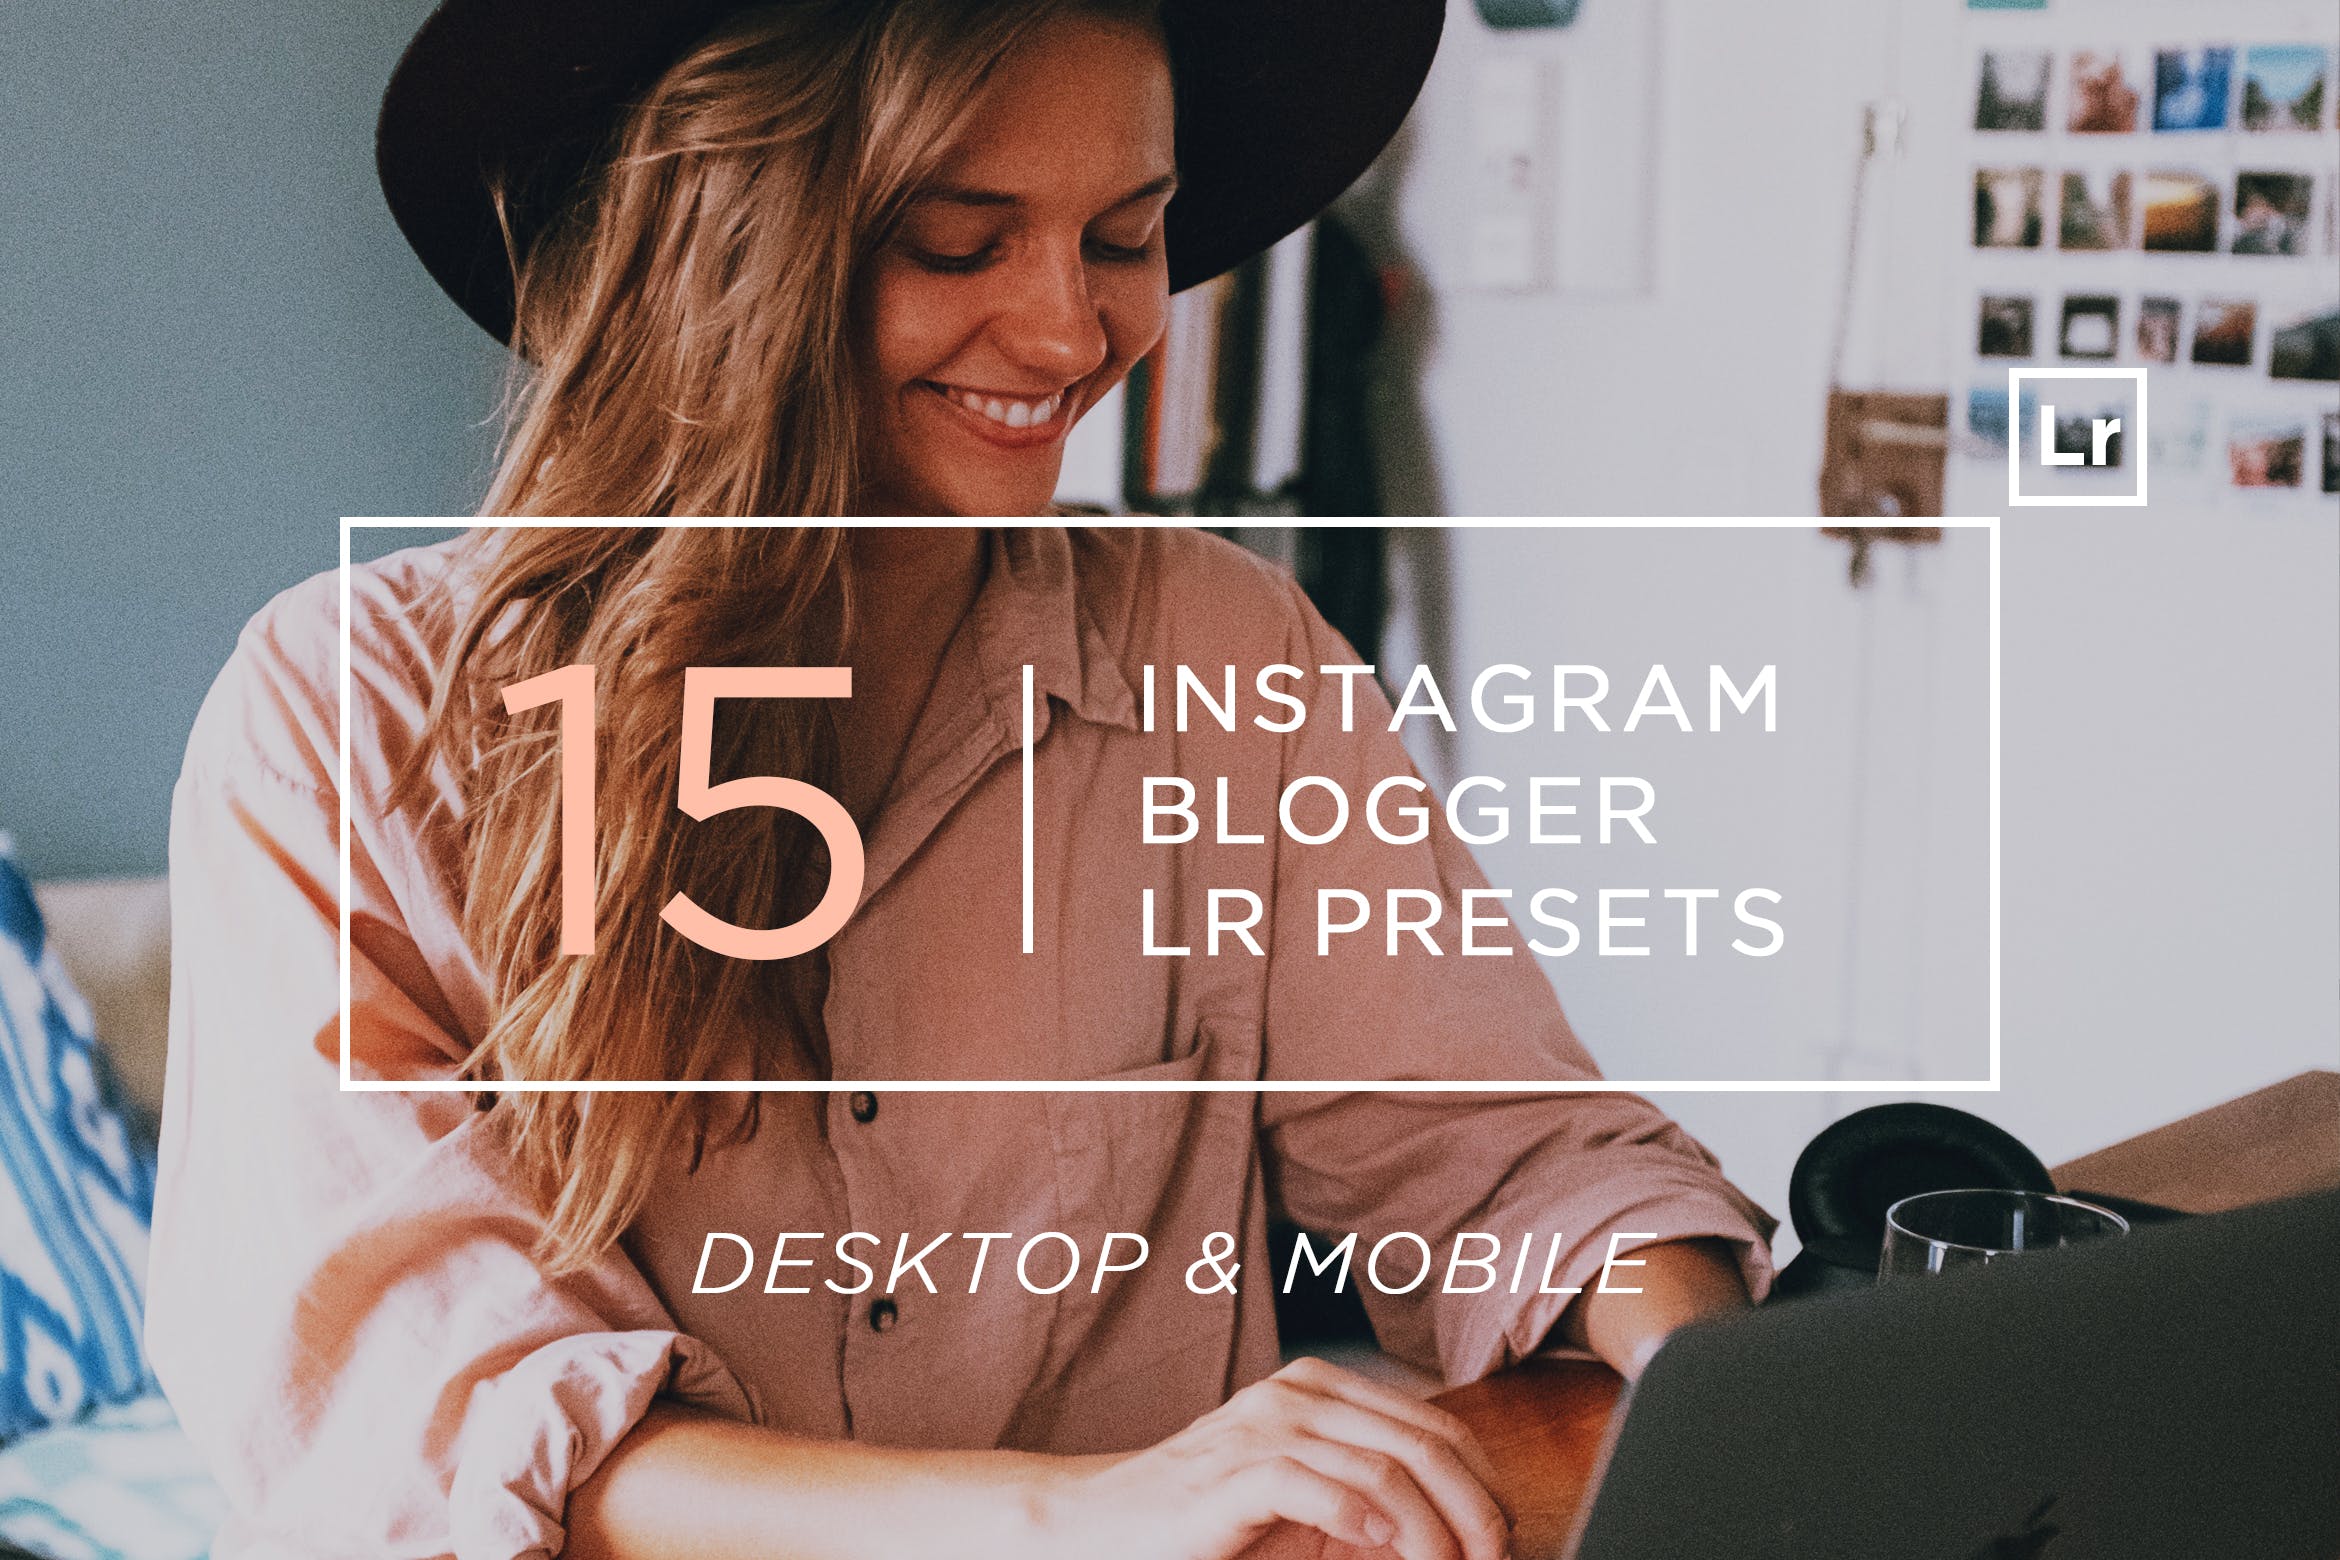 15款Instagram/Blogger照片贴图调色处理亿图网易图库精选LR预设 15 Instagram Blogger Lightroom Presets + Mobile插图